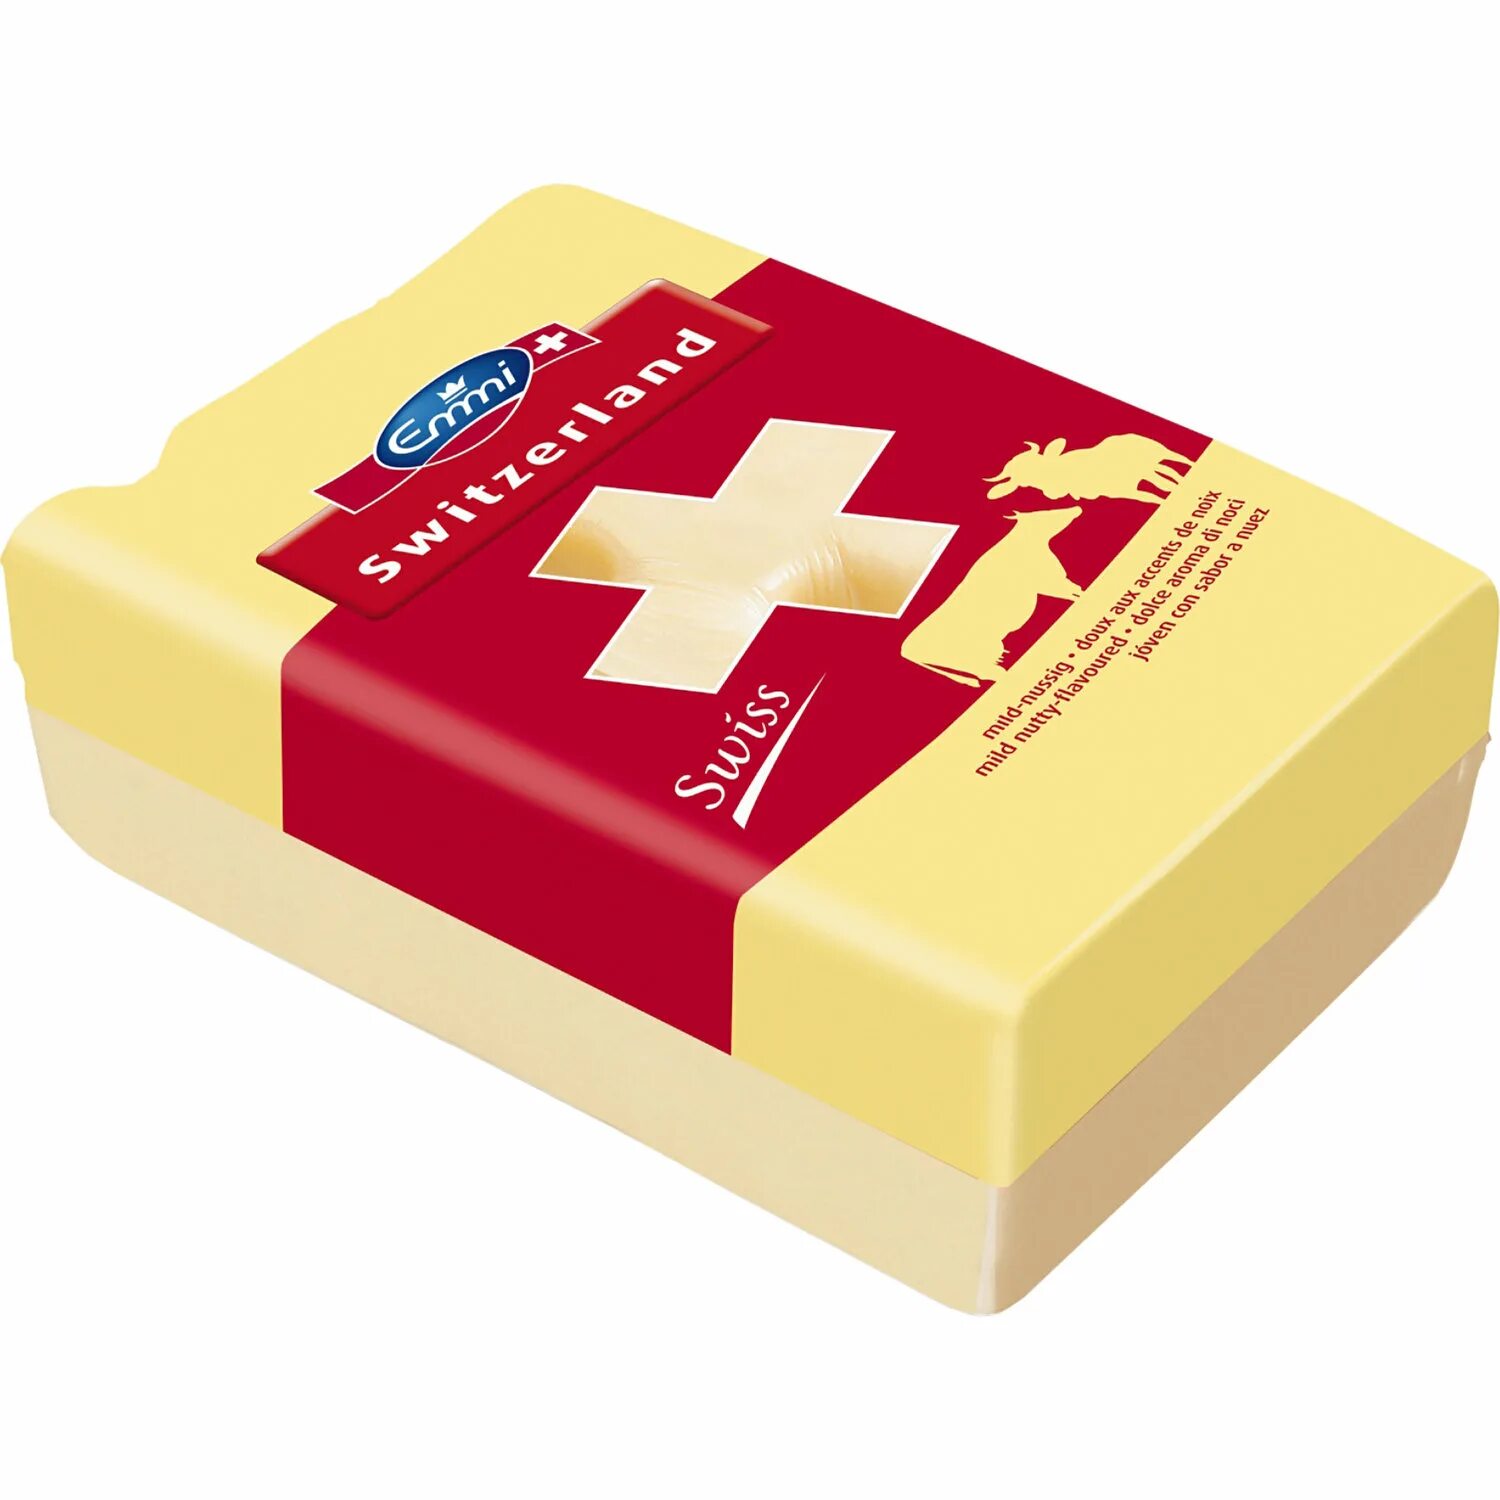 Сыр Emmi швейцарский. Сыр Gruyere 49% Emmi 150г Швейцария, БЗМЖ. Швейцарский сыр твердый. Швейцарские сыры упаковка.